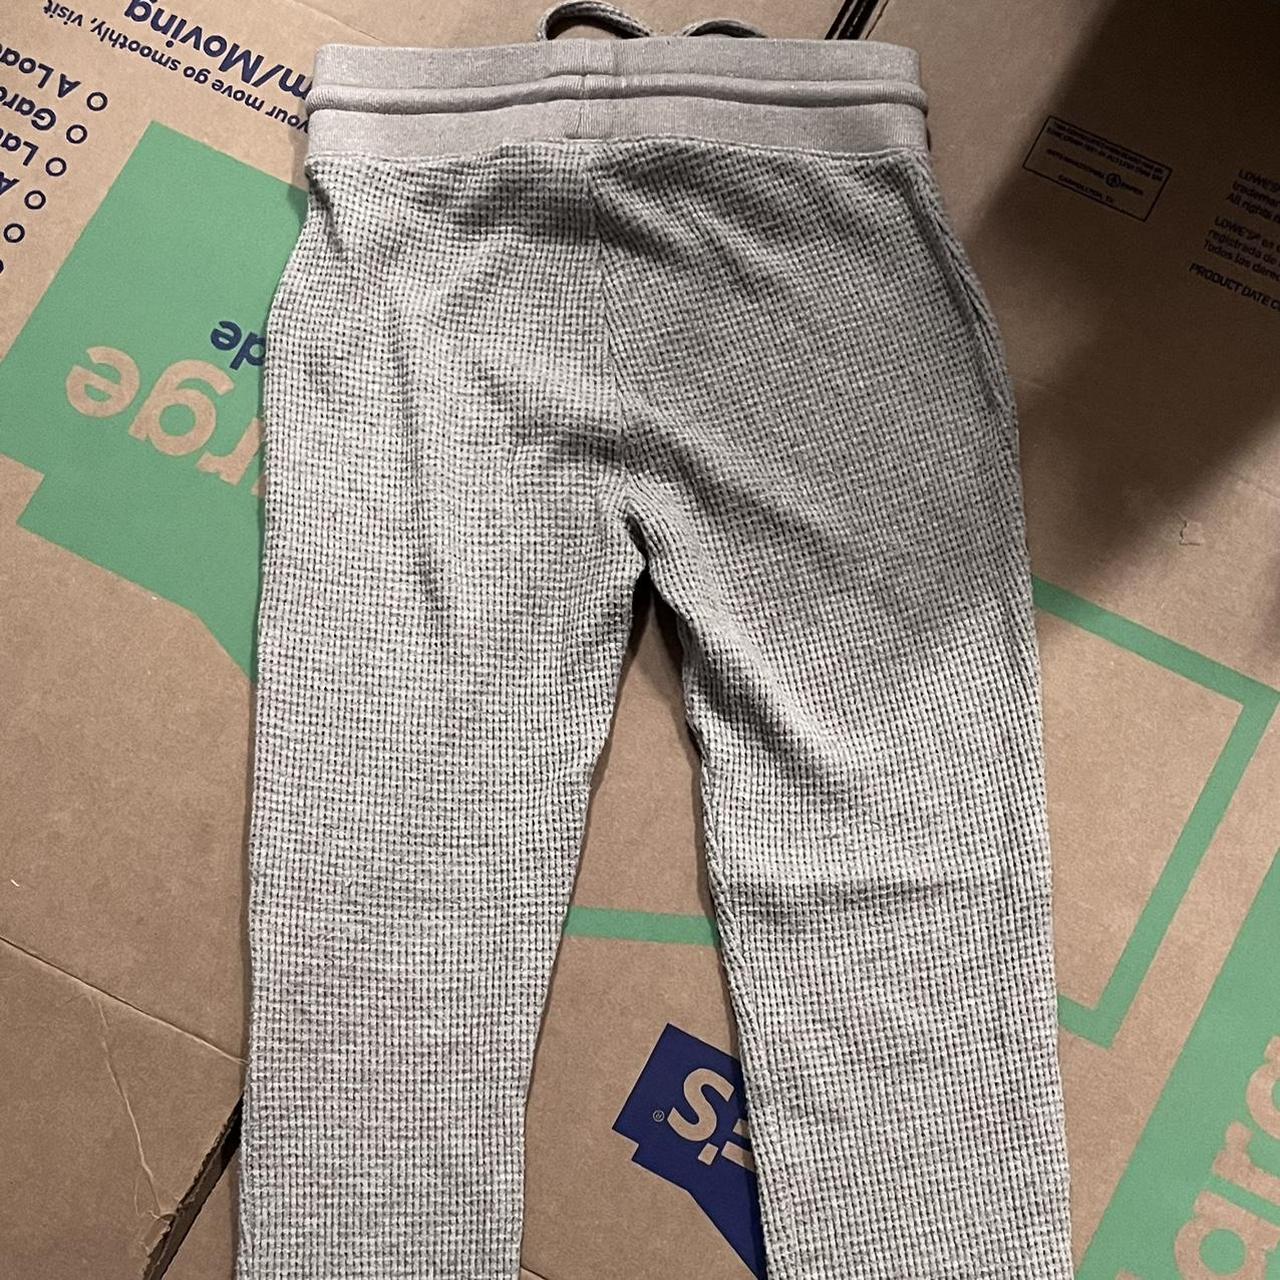 Lauren Conrad size small pajama pants - Depop